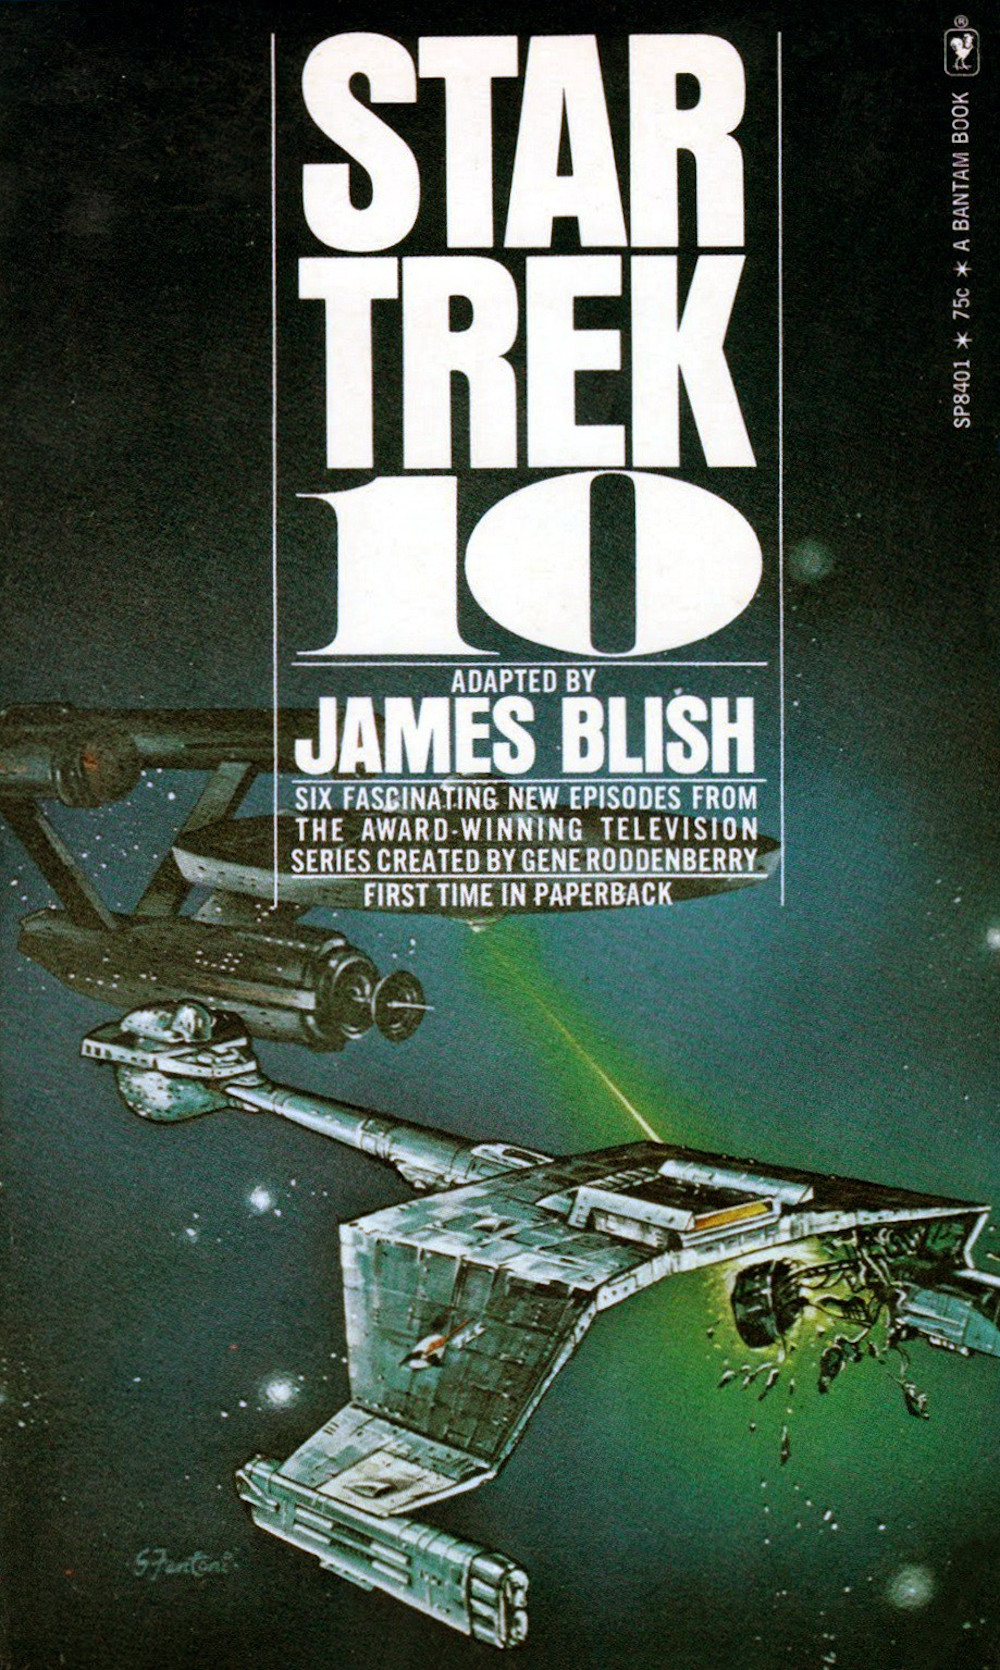 Star Trek 10 (Feb 1974)